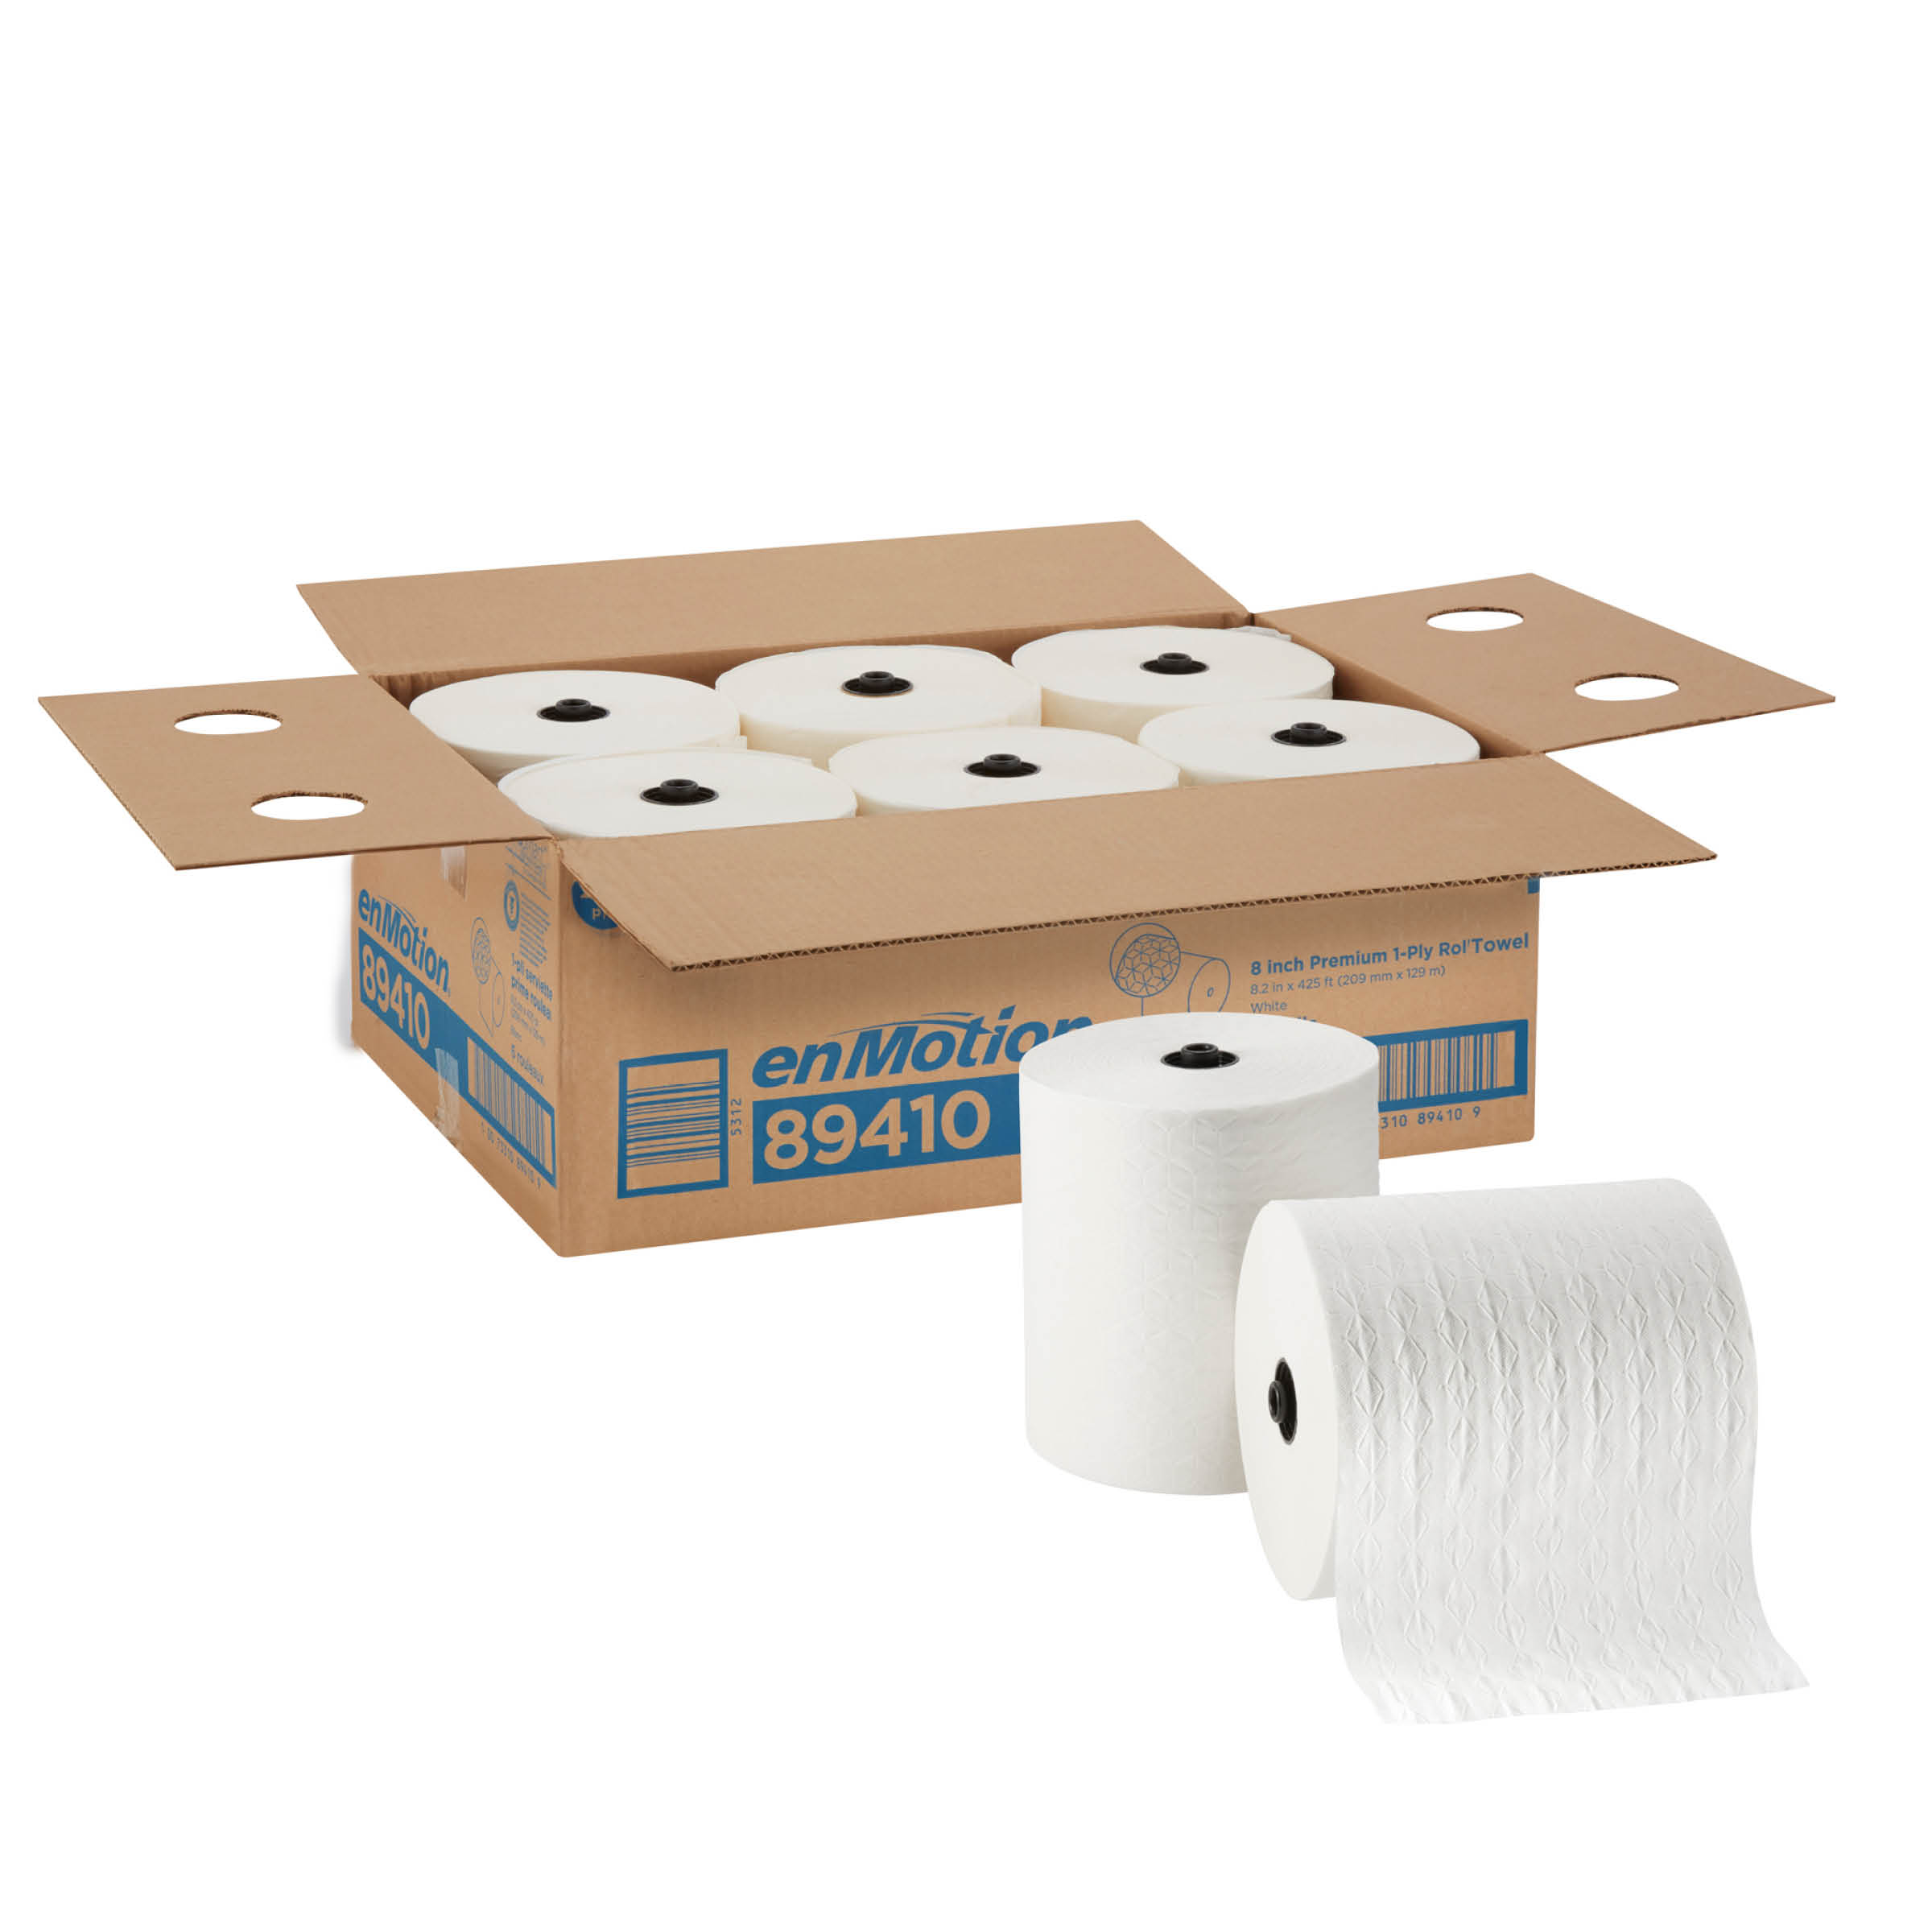 GP PRO ENMOTION® 8# Premium Paper Towel Roll, White, 89410, 425ft/Roll, 6 Rolls/Case